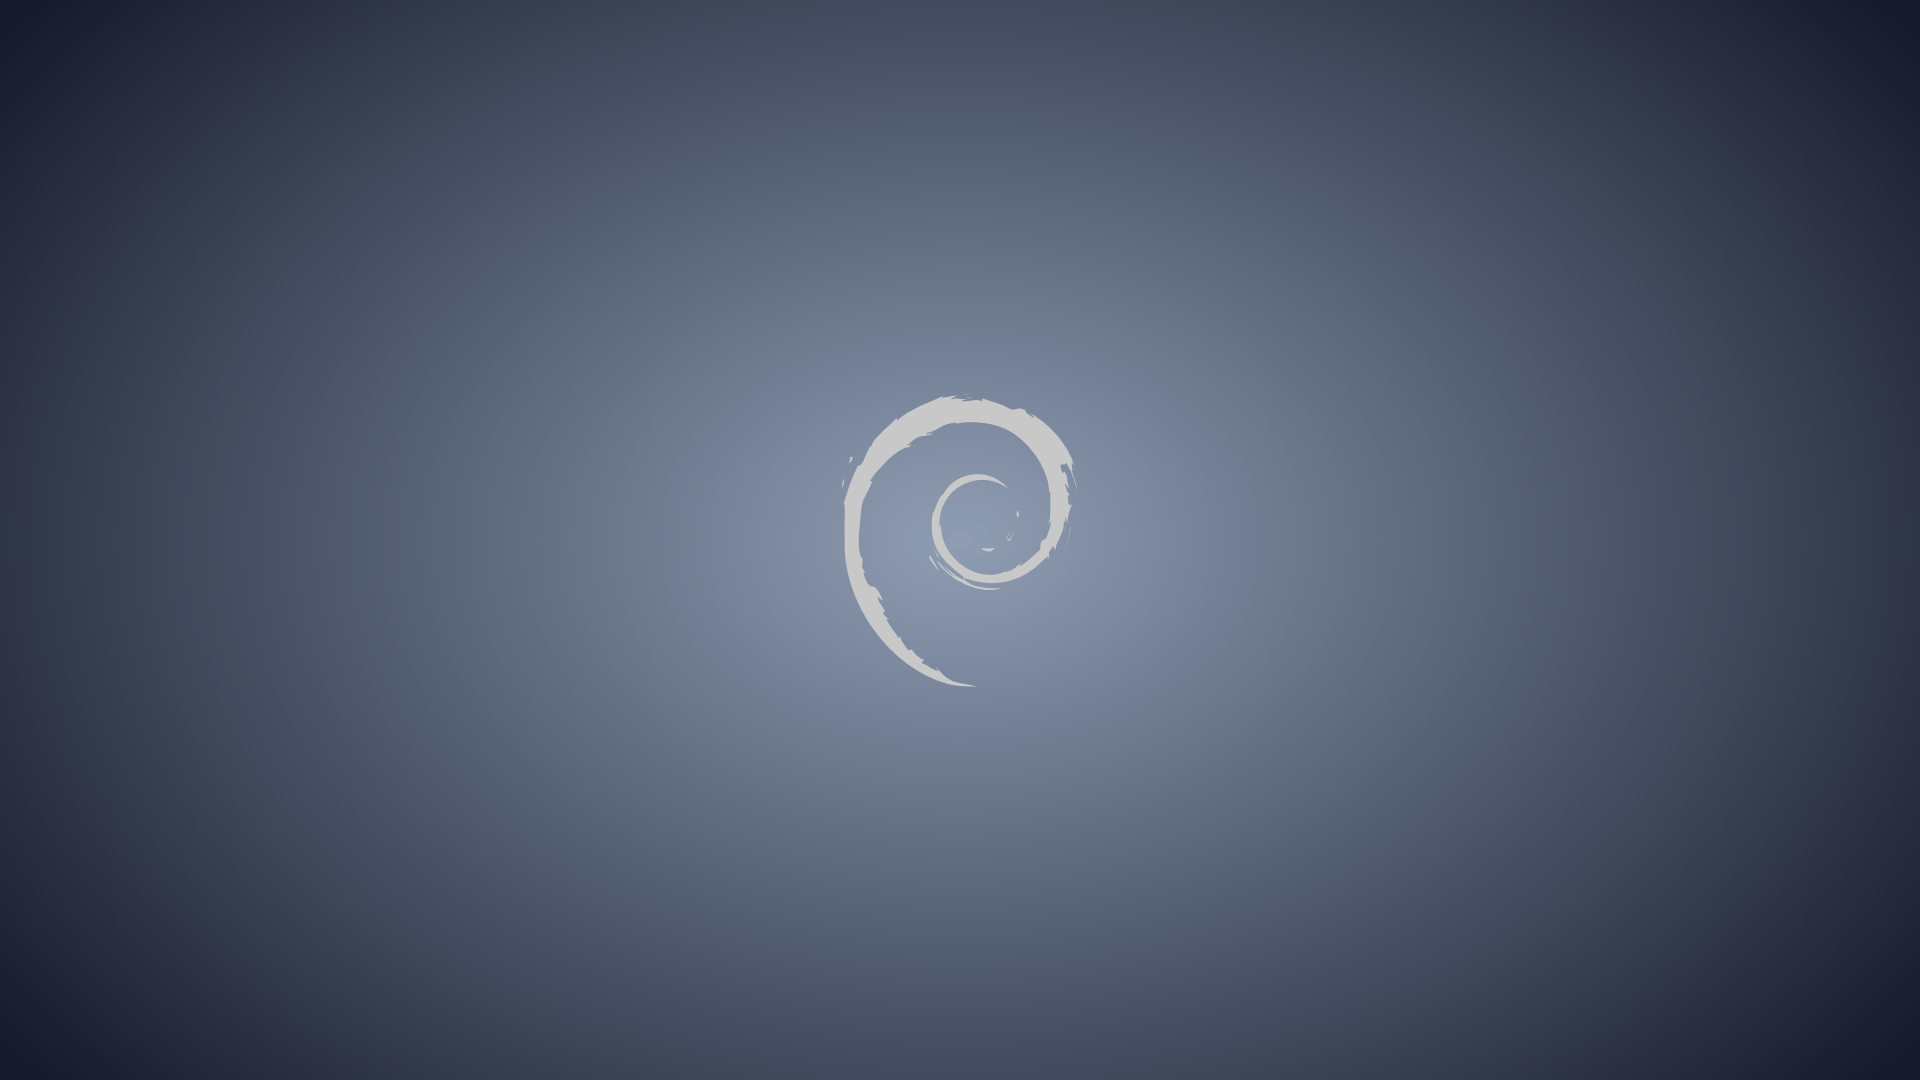 New Debian Theme Brings Lots of "